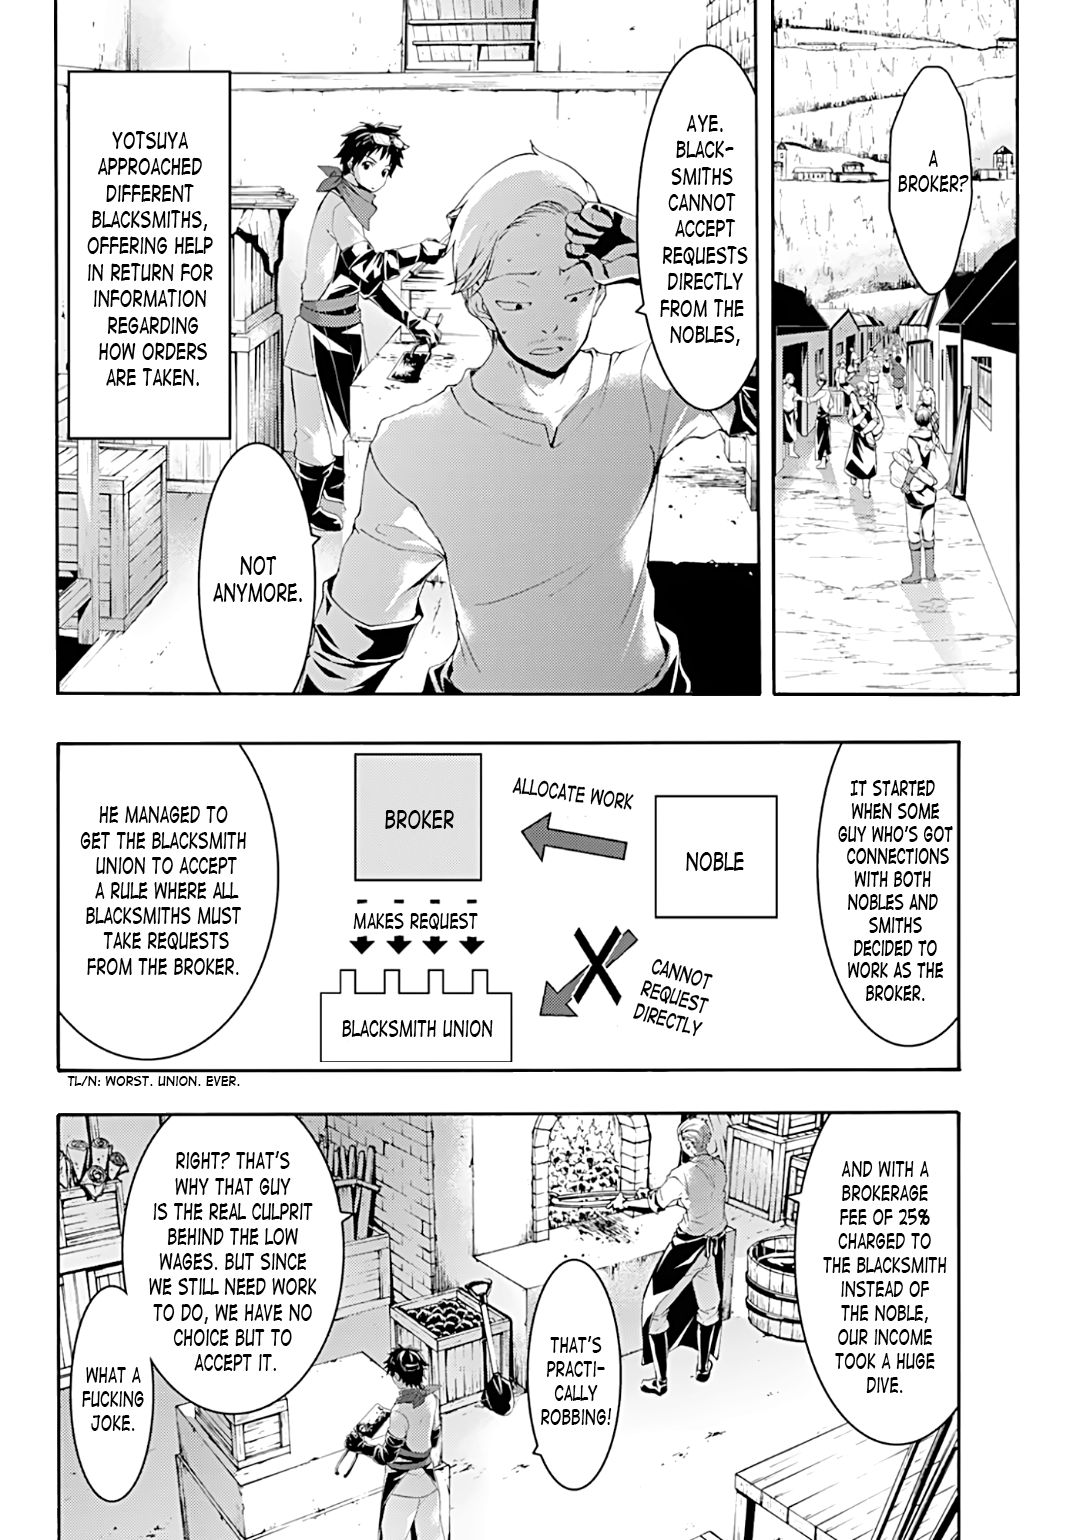 100-man no Inochi no Ue ni Ore wa Tatteiru Manga - Chapter 42 - Manga Rock  Team - Read Manga Online For Free